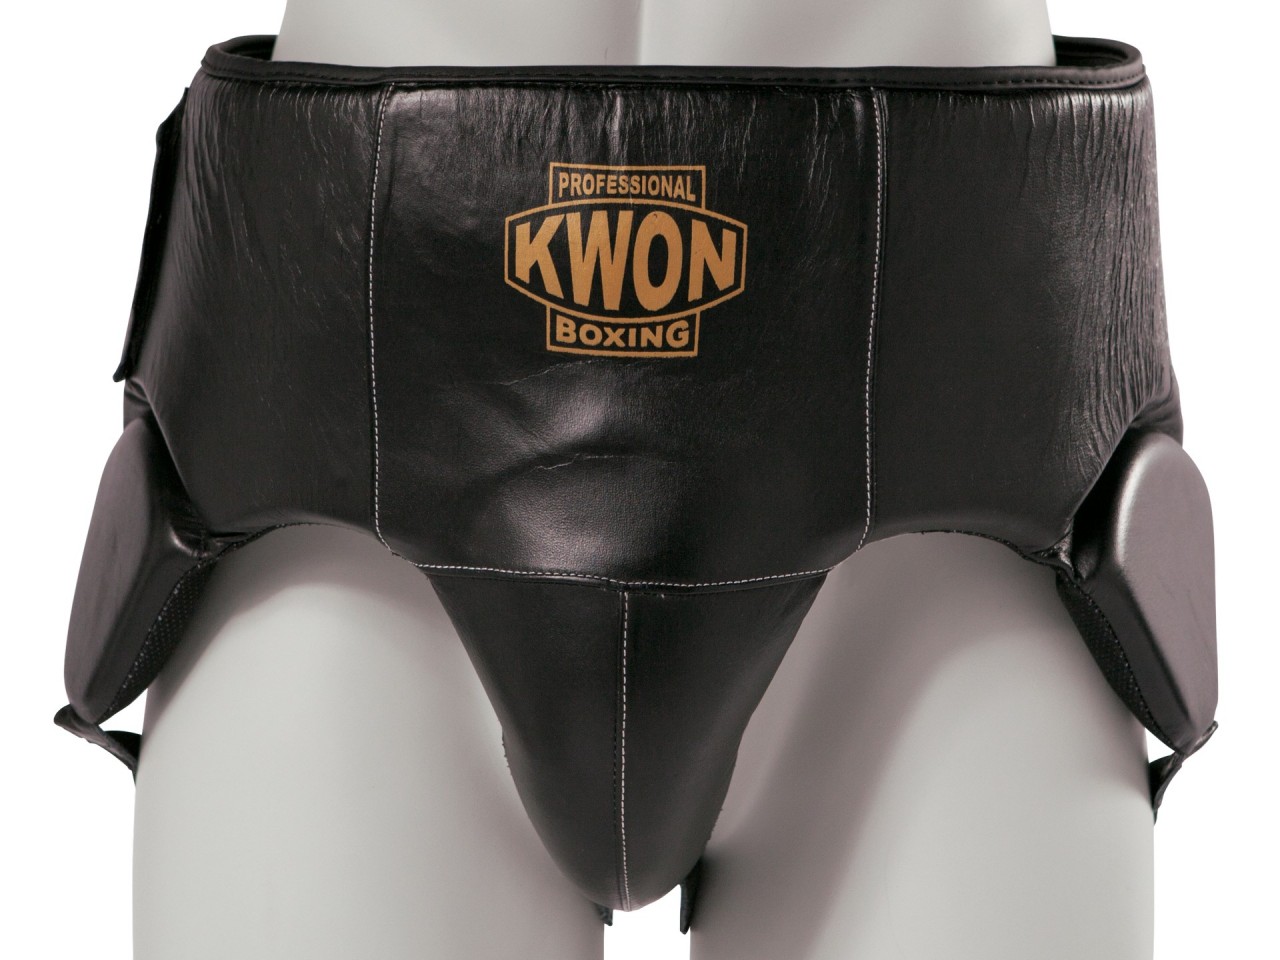 KWON Box Tiefschutz von KWON PROFESSIONAL BOXING